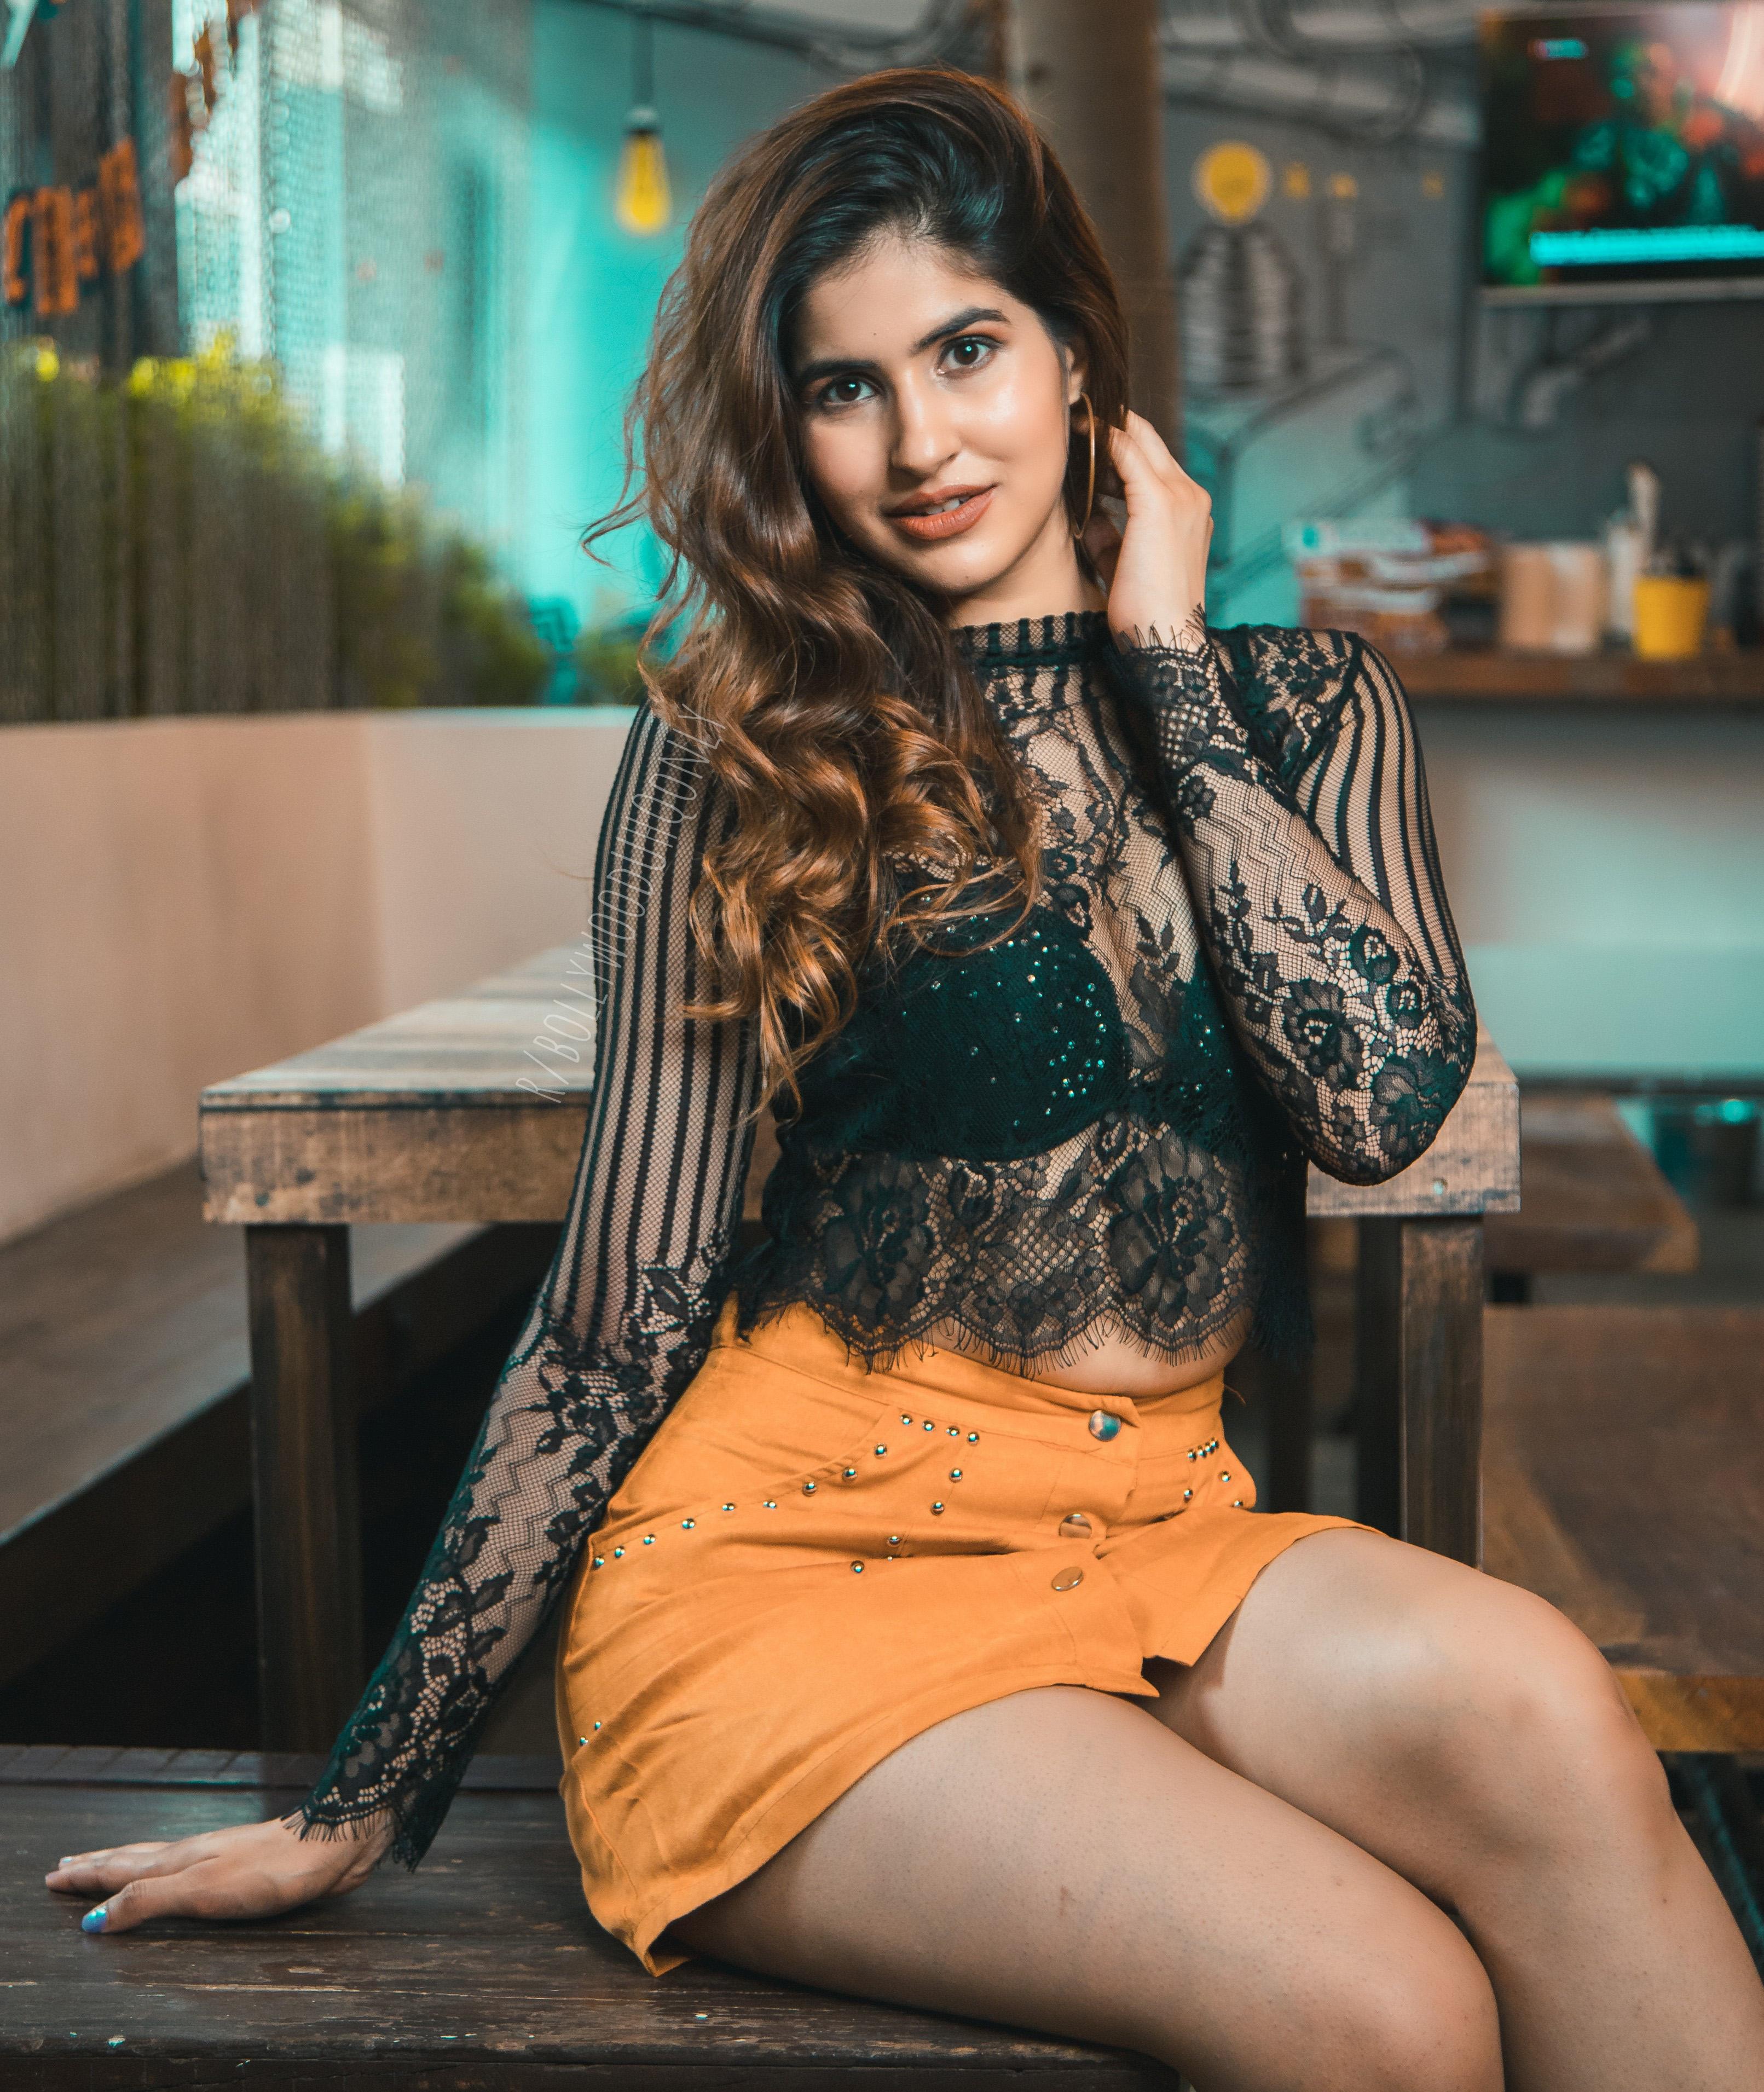 Bollywood Actress 2018 Wallpapers - Wallpaper Cave